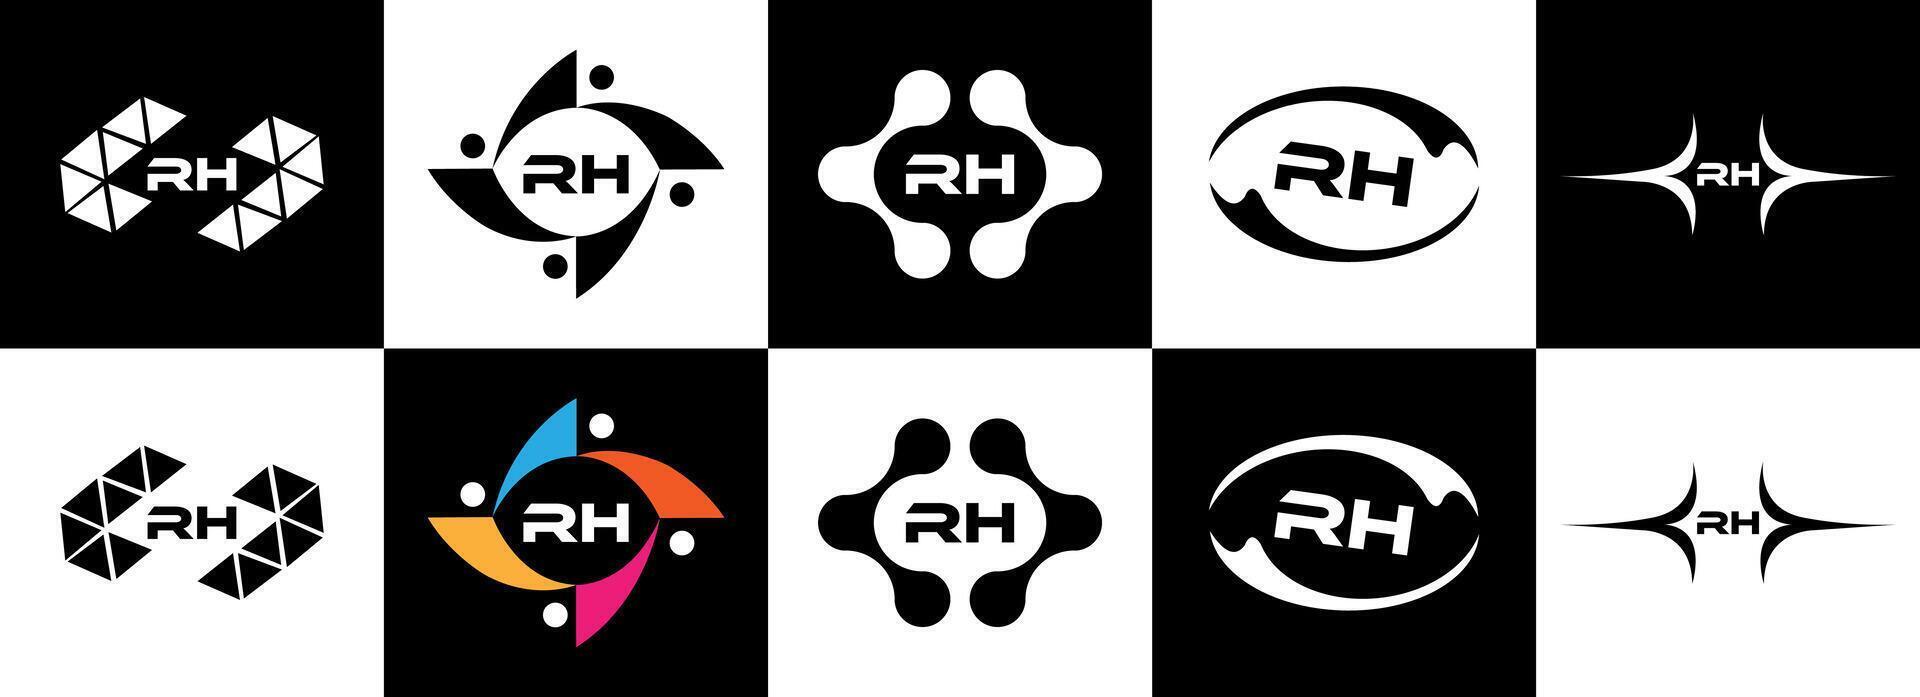 rh logo. rh conjunto , r h diseño. blanco rh carta. Rh, r h letra logo diseño. inicial letra rh letra logo colocar, vinculado circulo mayúscula monograma logo. r h letra logo vector diseño. Pro vector